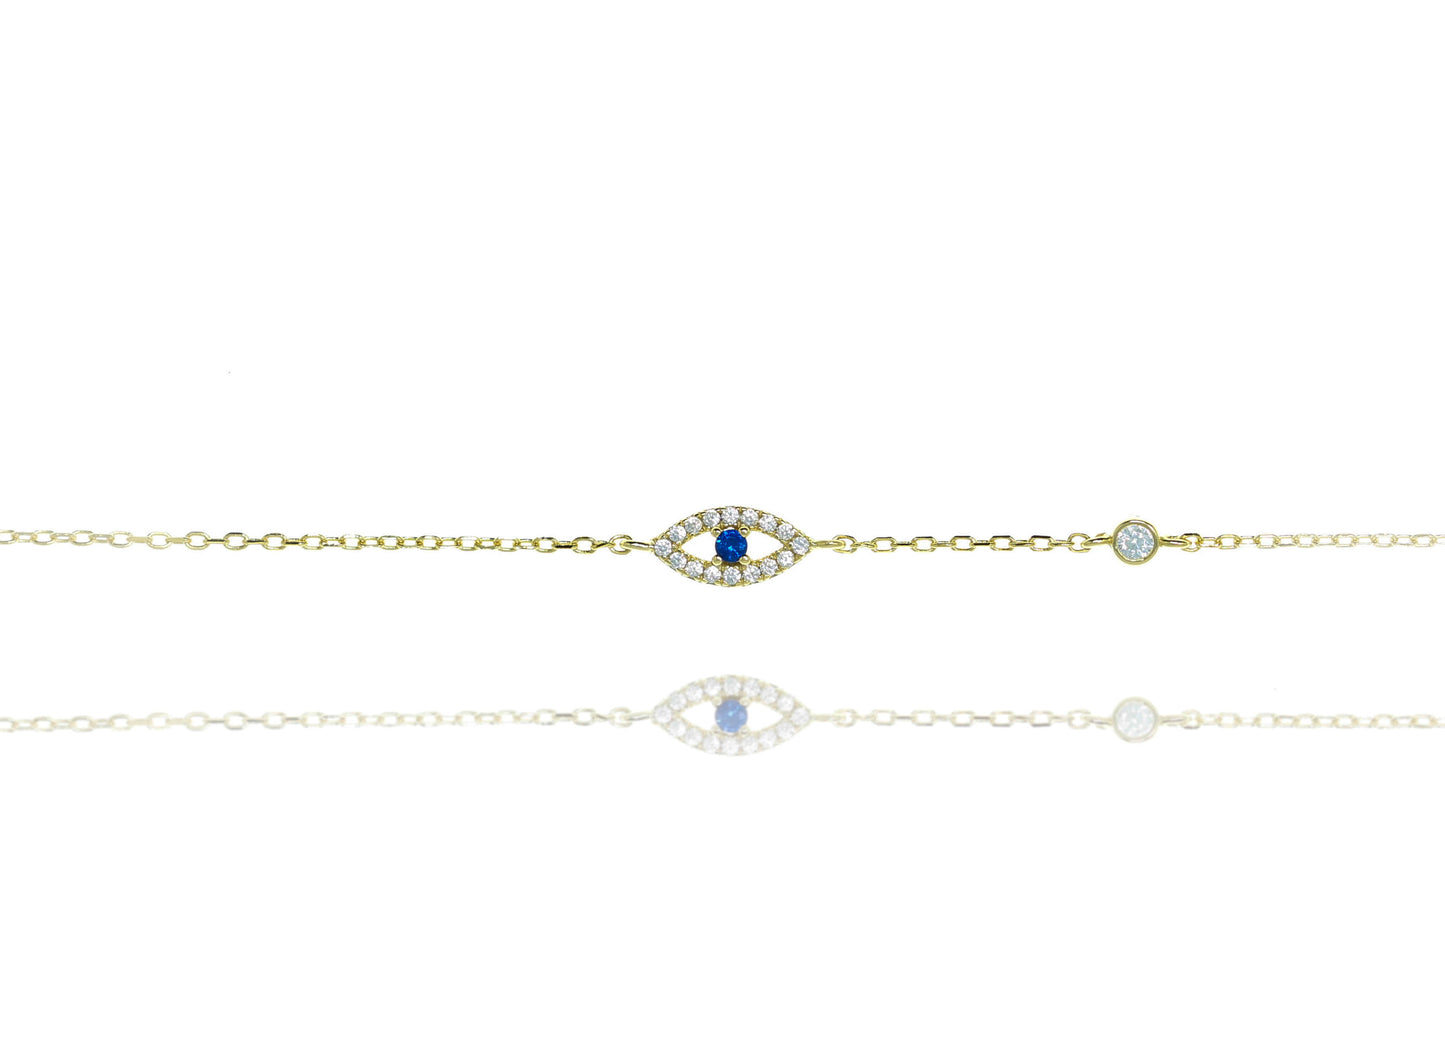 BF-10/GB - Evil Eye Chain Bracelet with a Blue Centre Stone